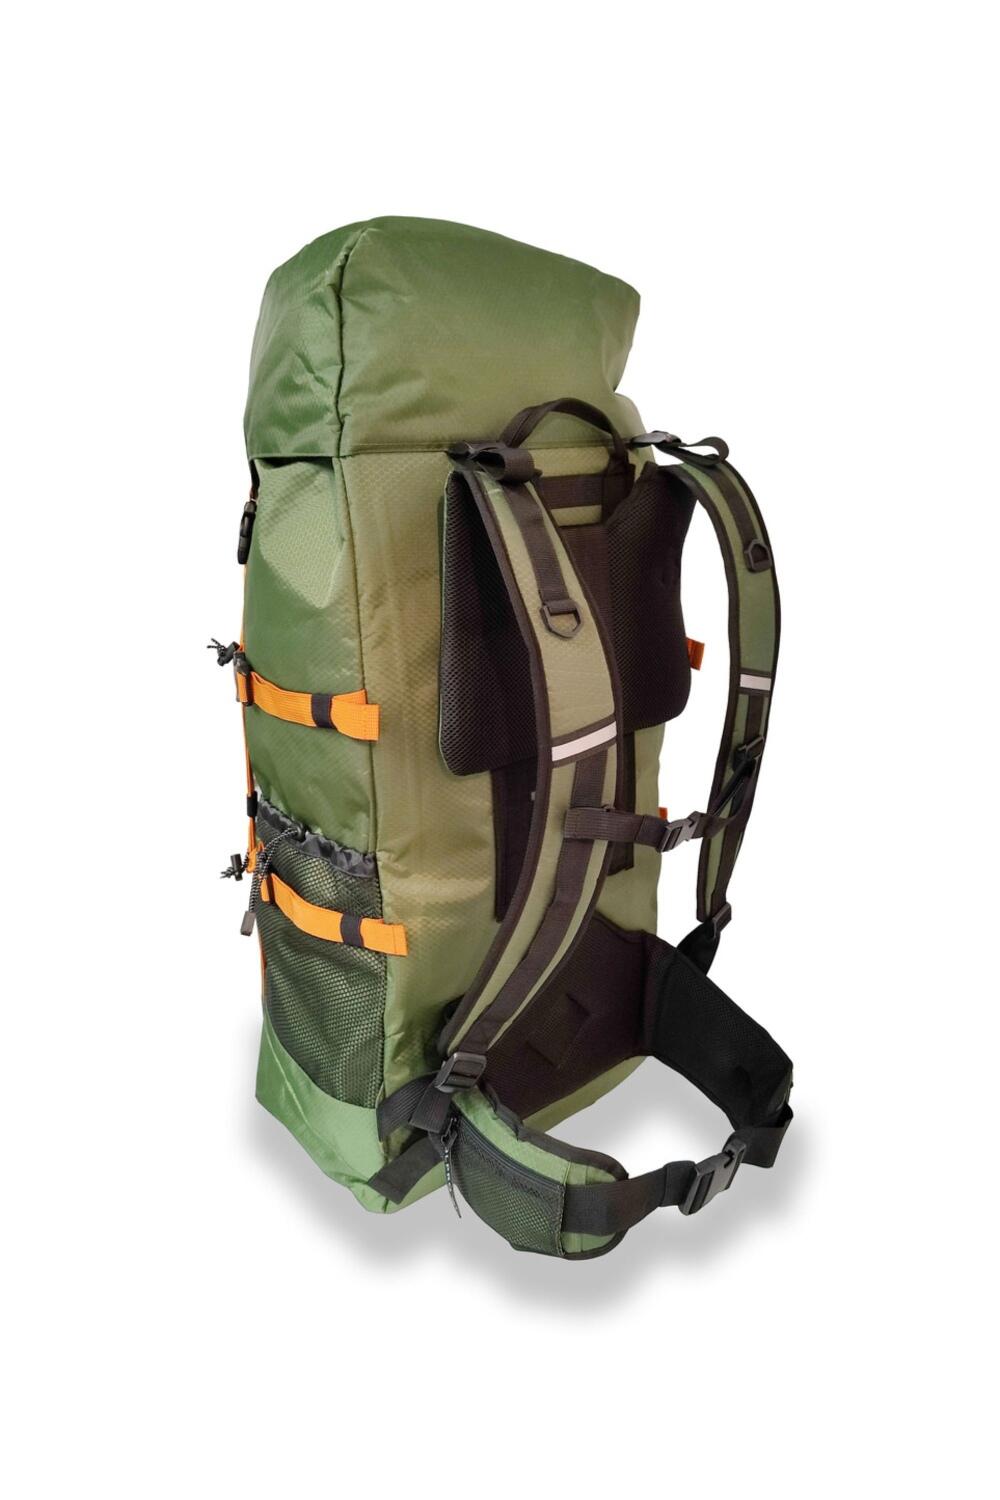 OLPRO 80L Rucksack Bag Green 2/5